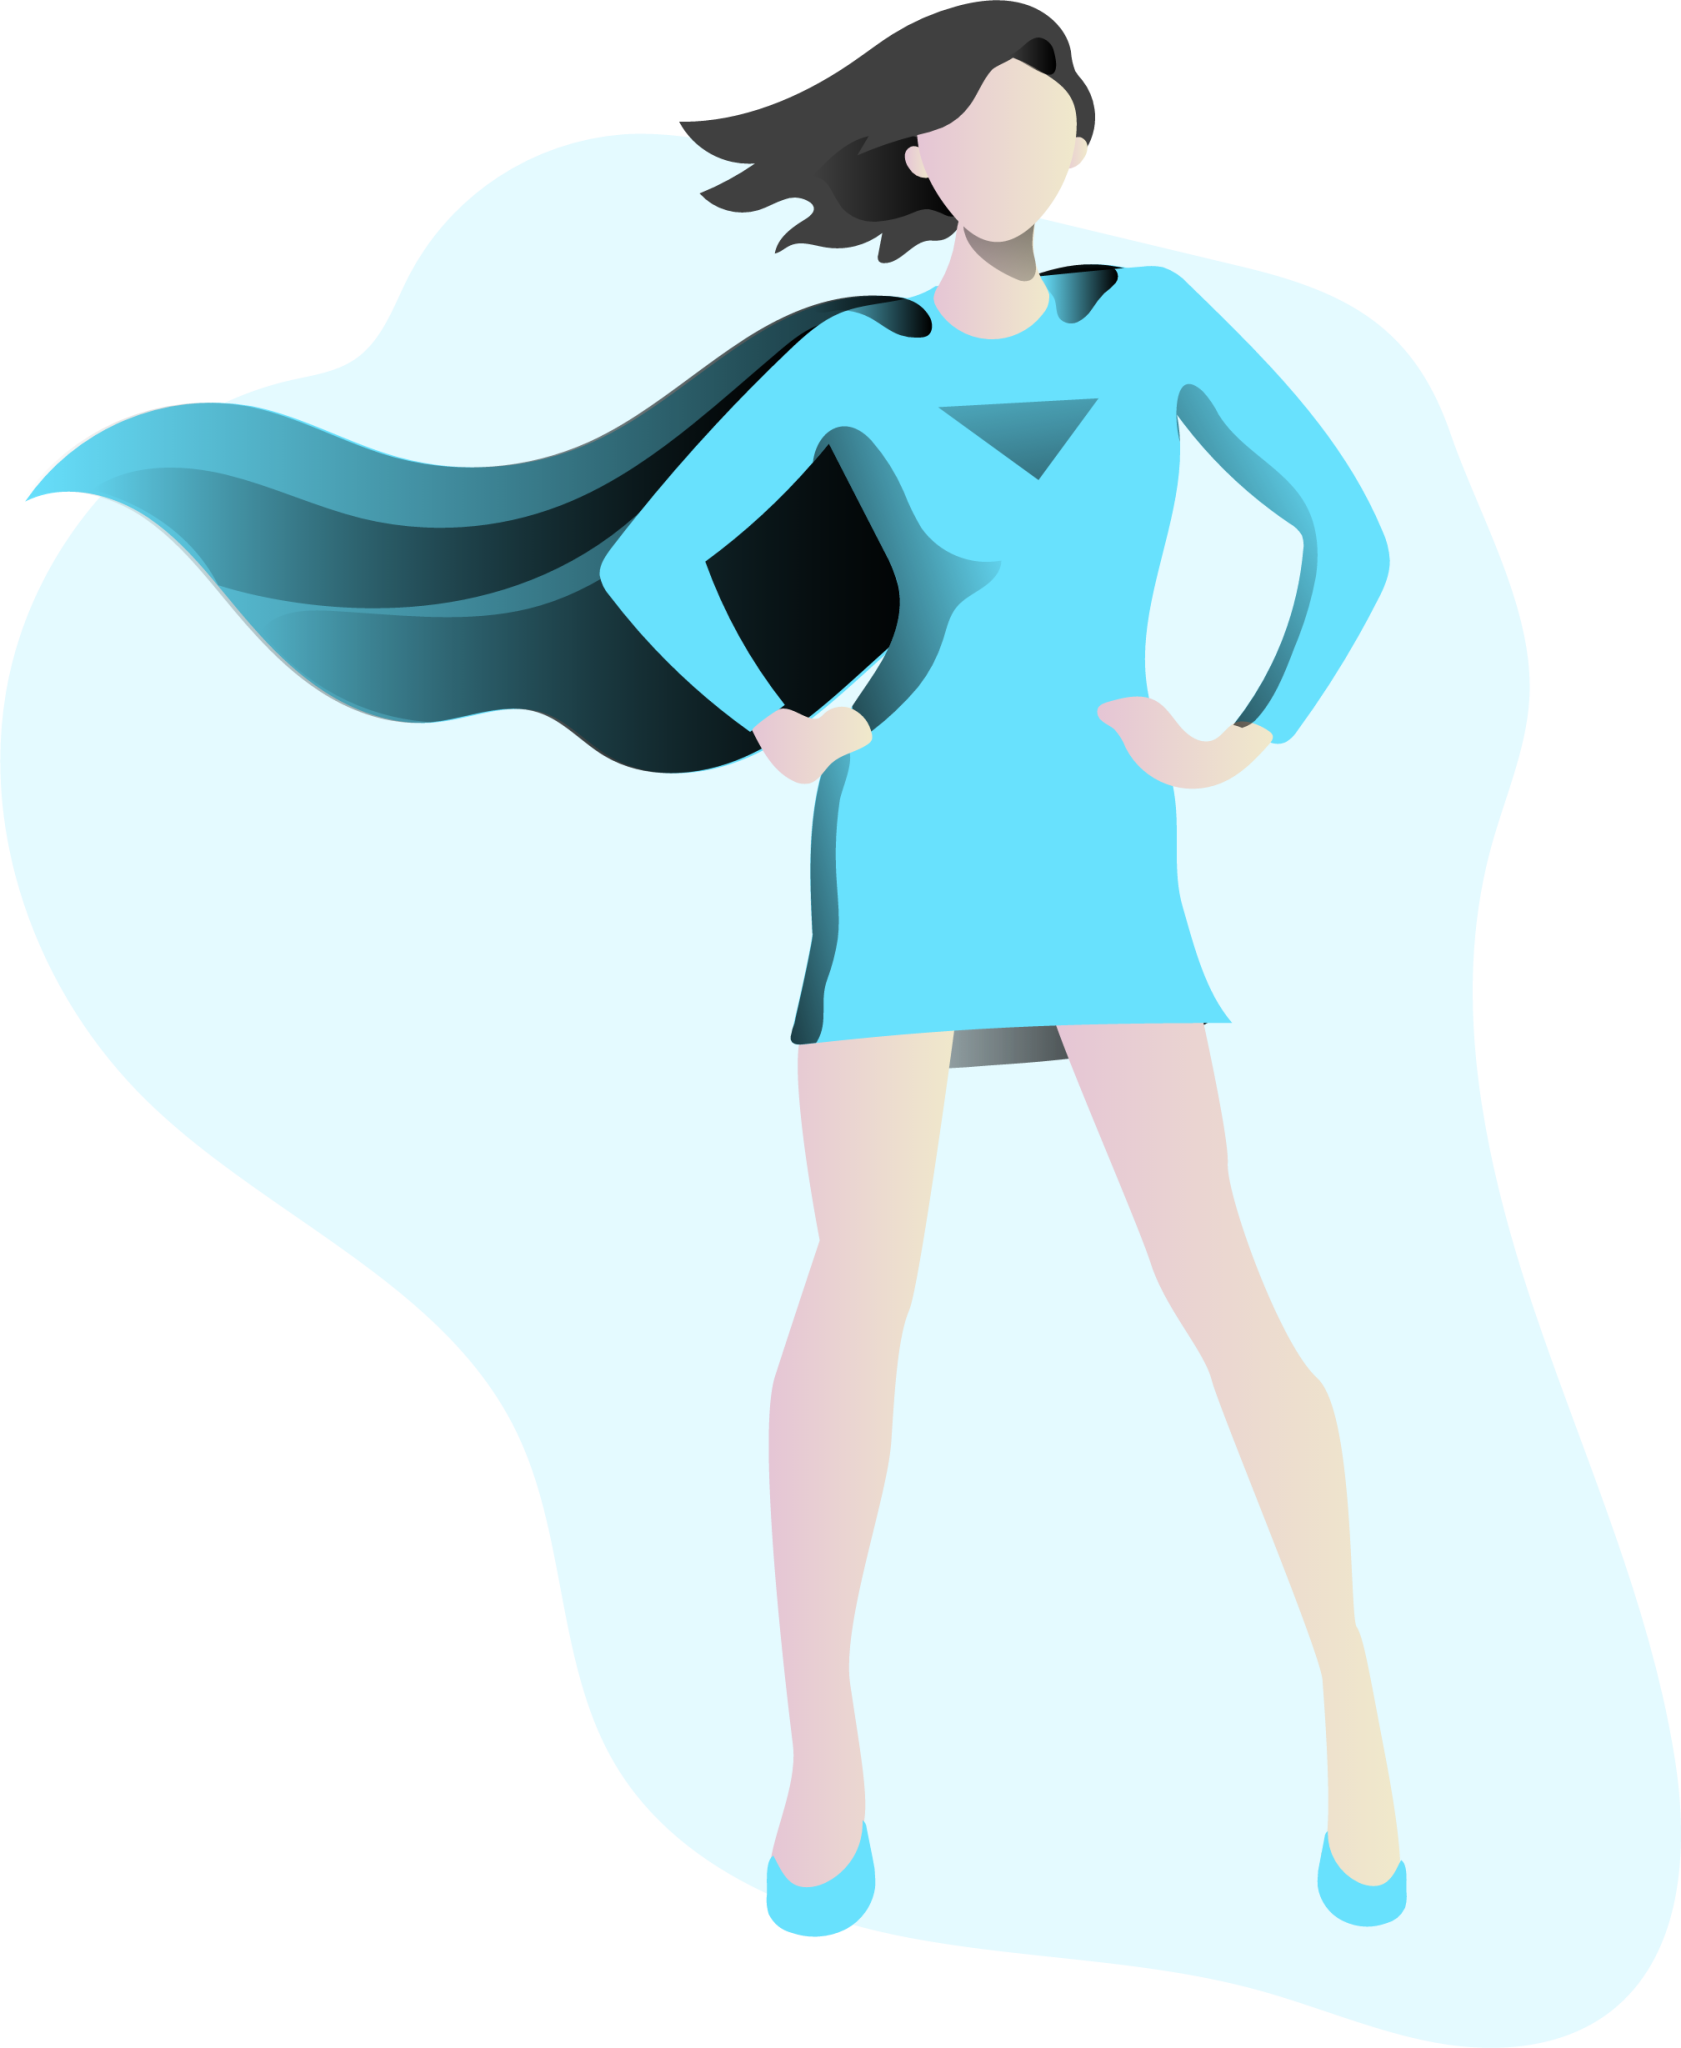 Super Woman illustration